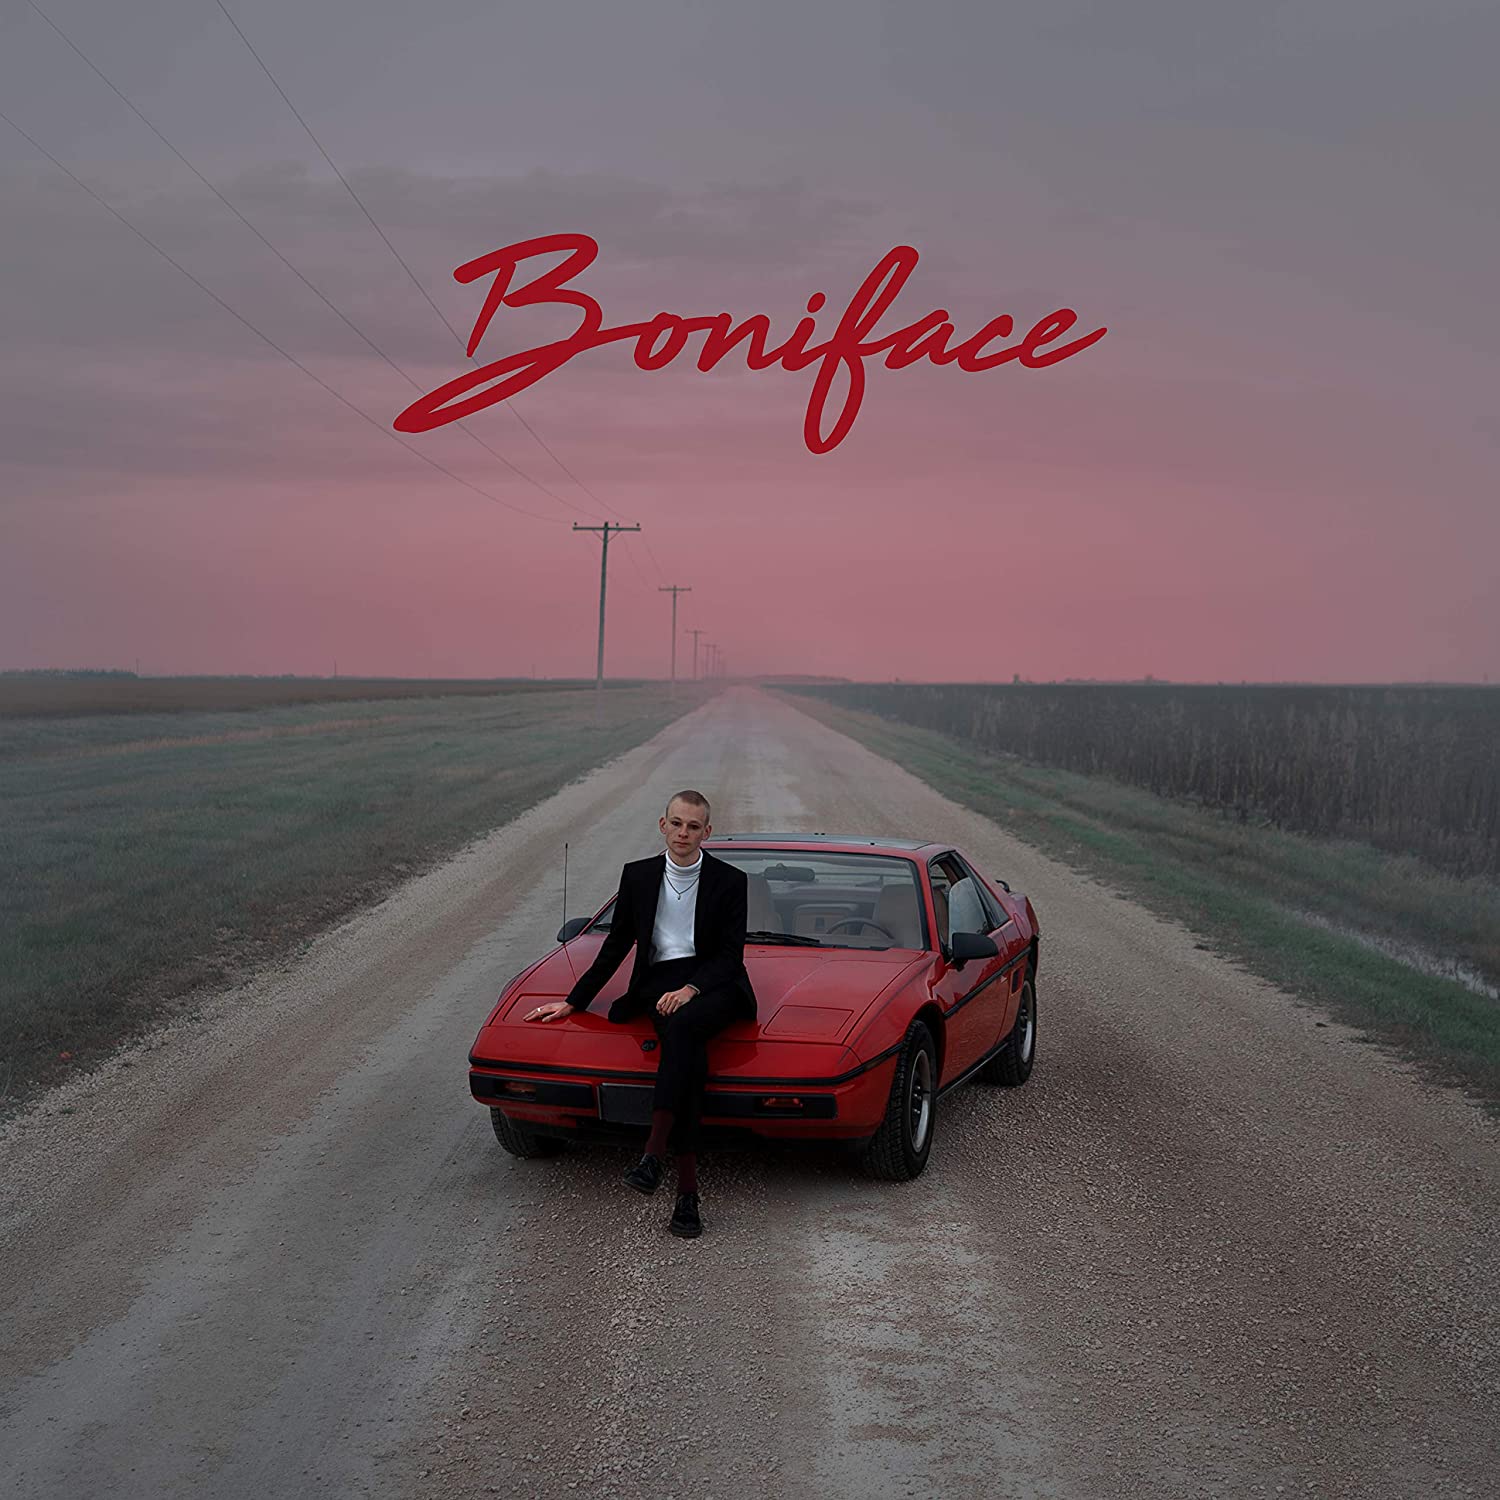 Boniface "Boniface" LP